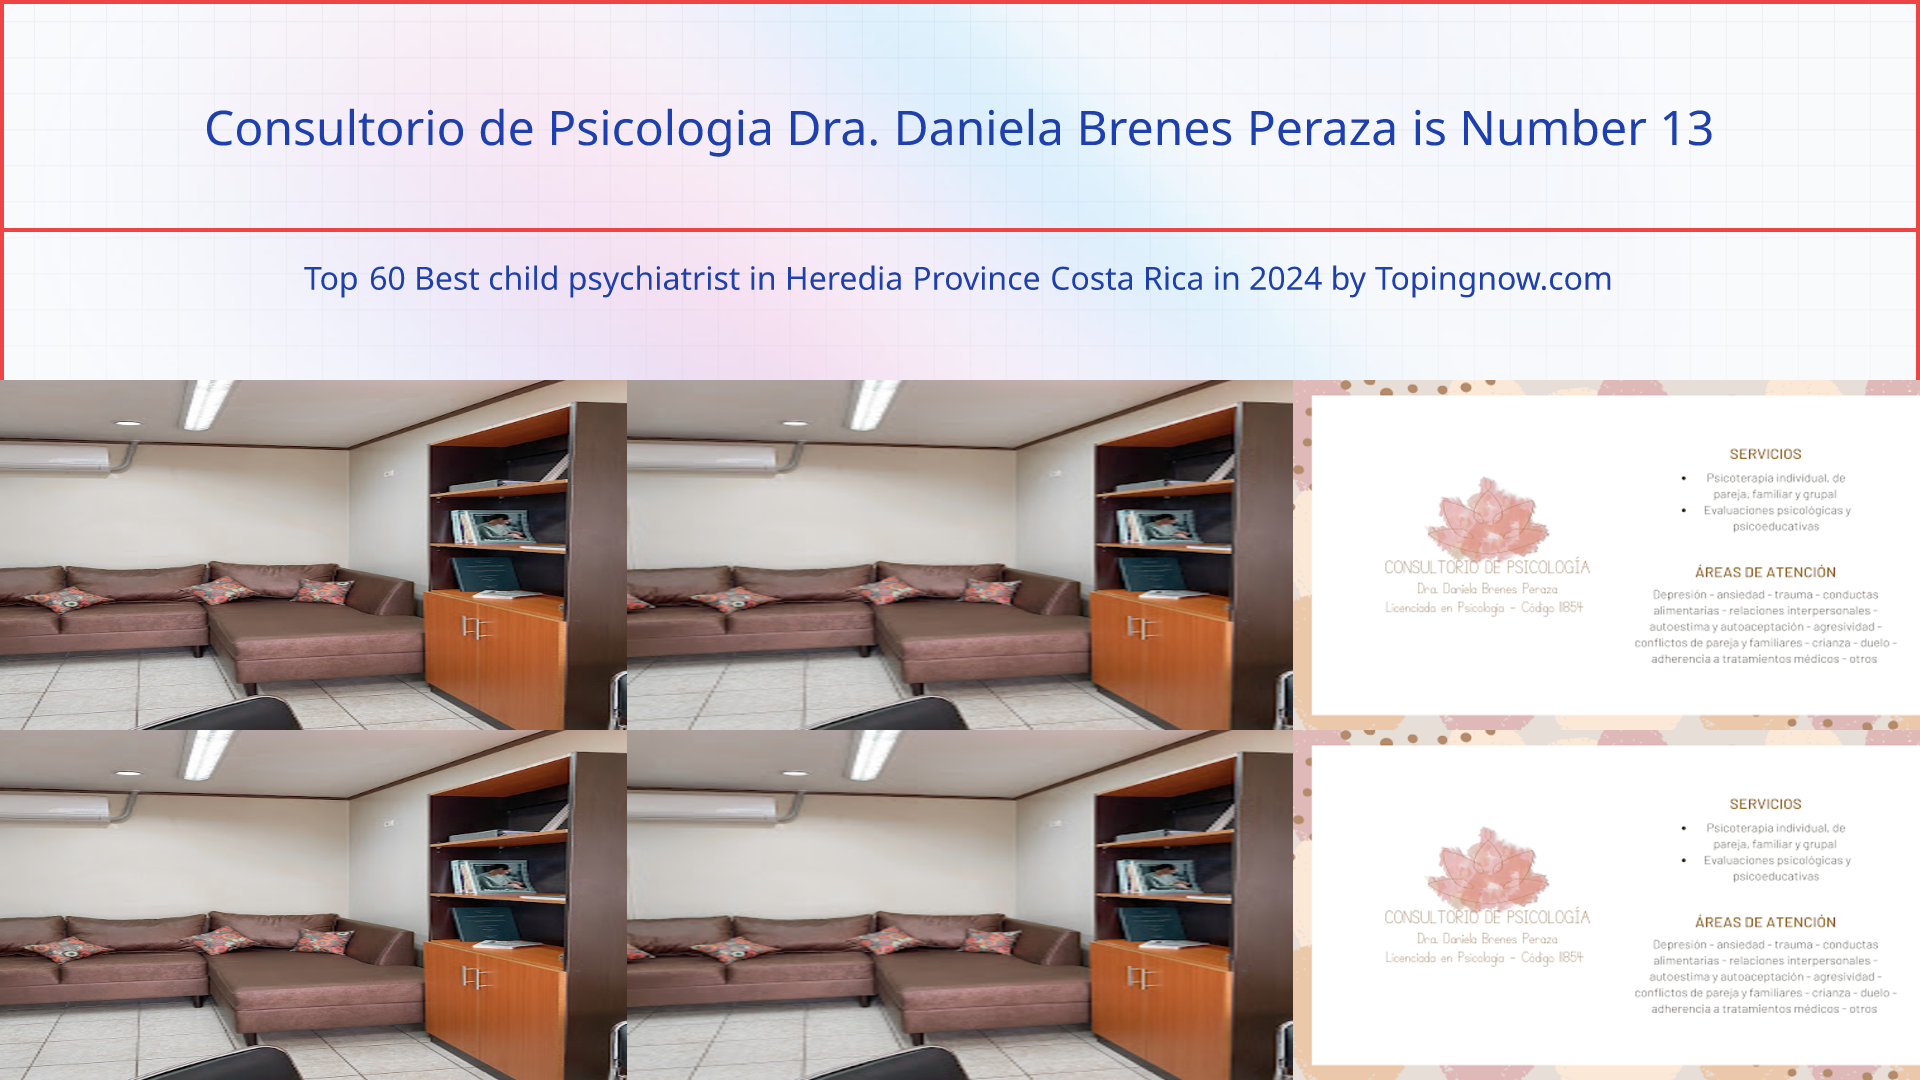 Consultorio de Psicologia Dra. Daniela Brenes Peraza: Top 60 Best child psychiatrist in Heredia Province Costa Rica in 2024